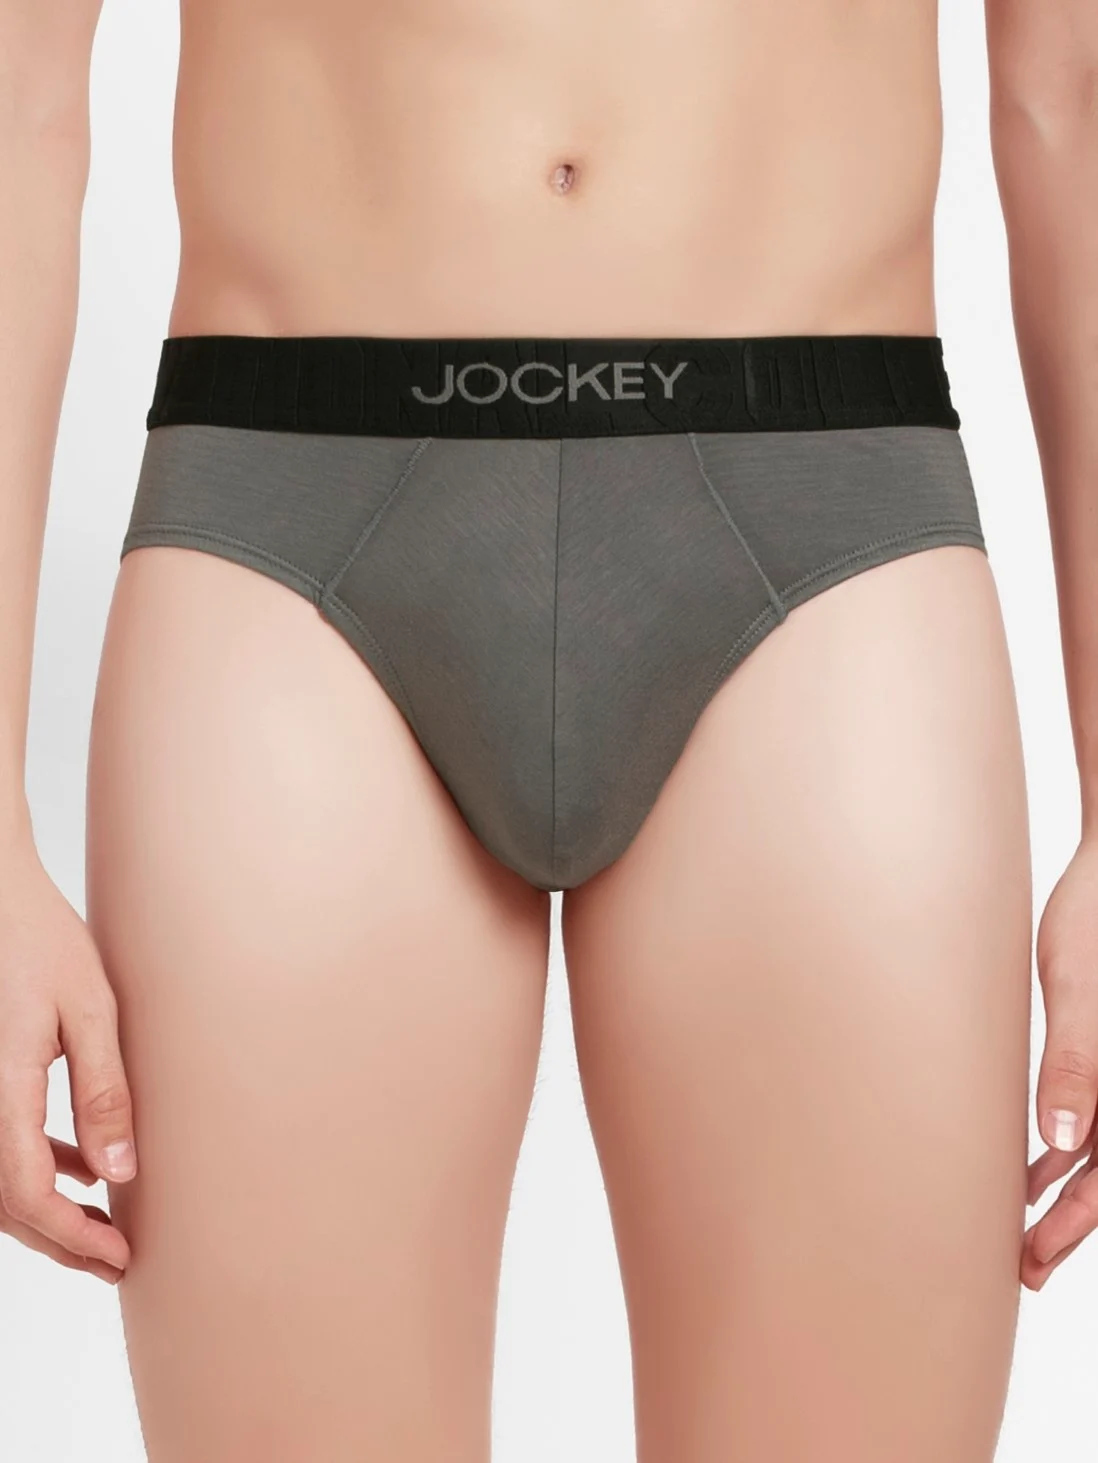 Jockey Breif #IC 31 – Lachic Innerwear and Cosmetics